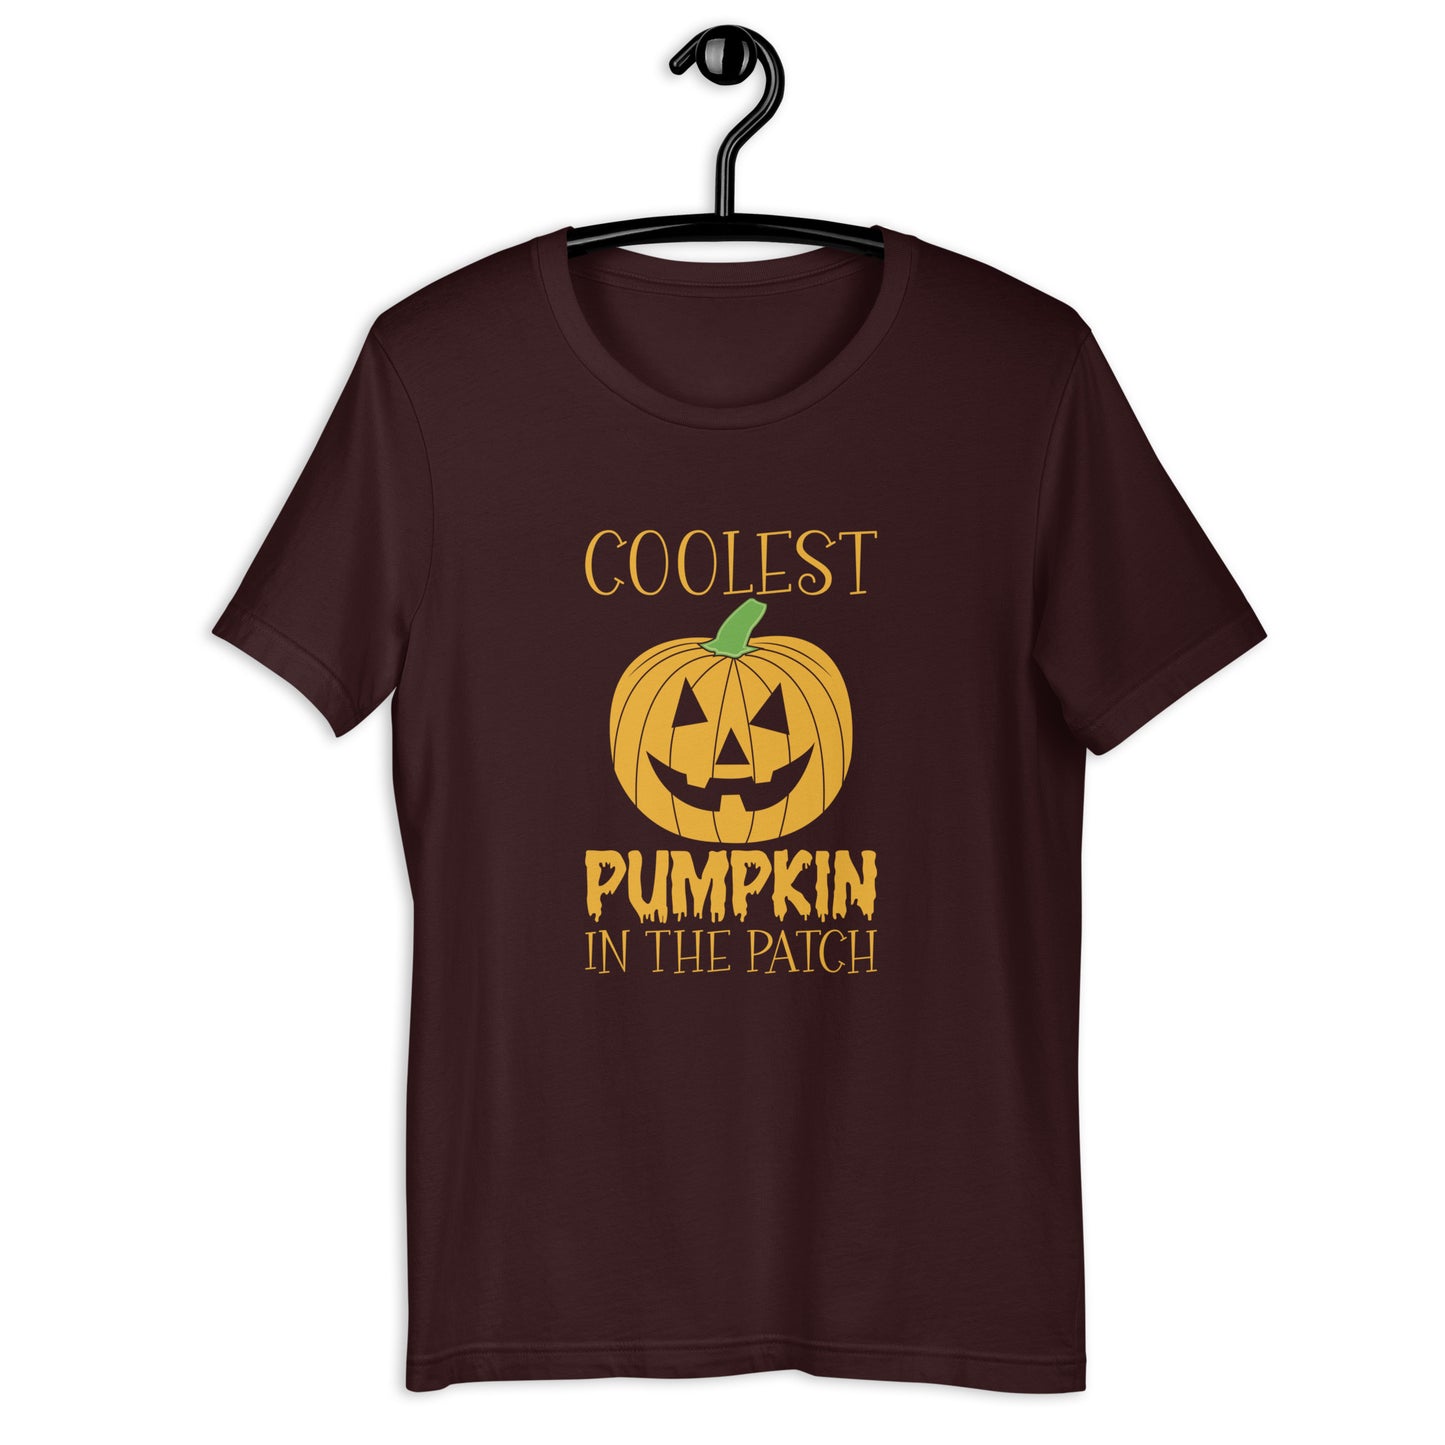 Coolest Pumpkin in the Patch Unisex T-shirt